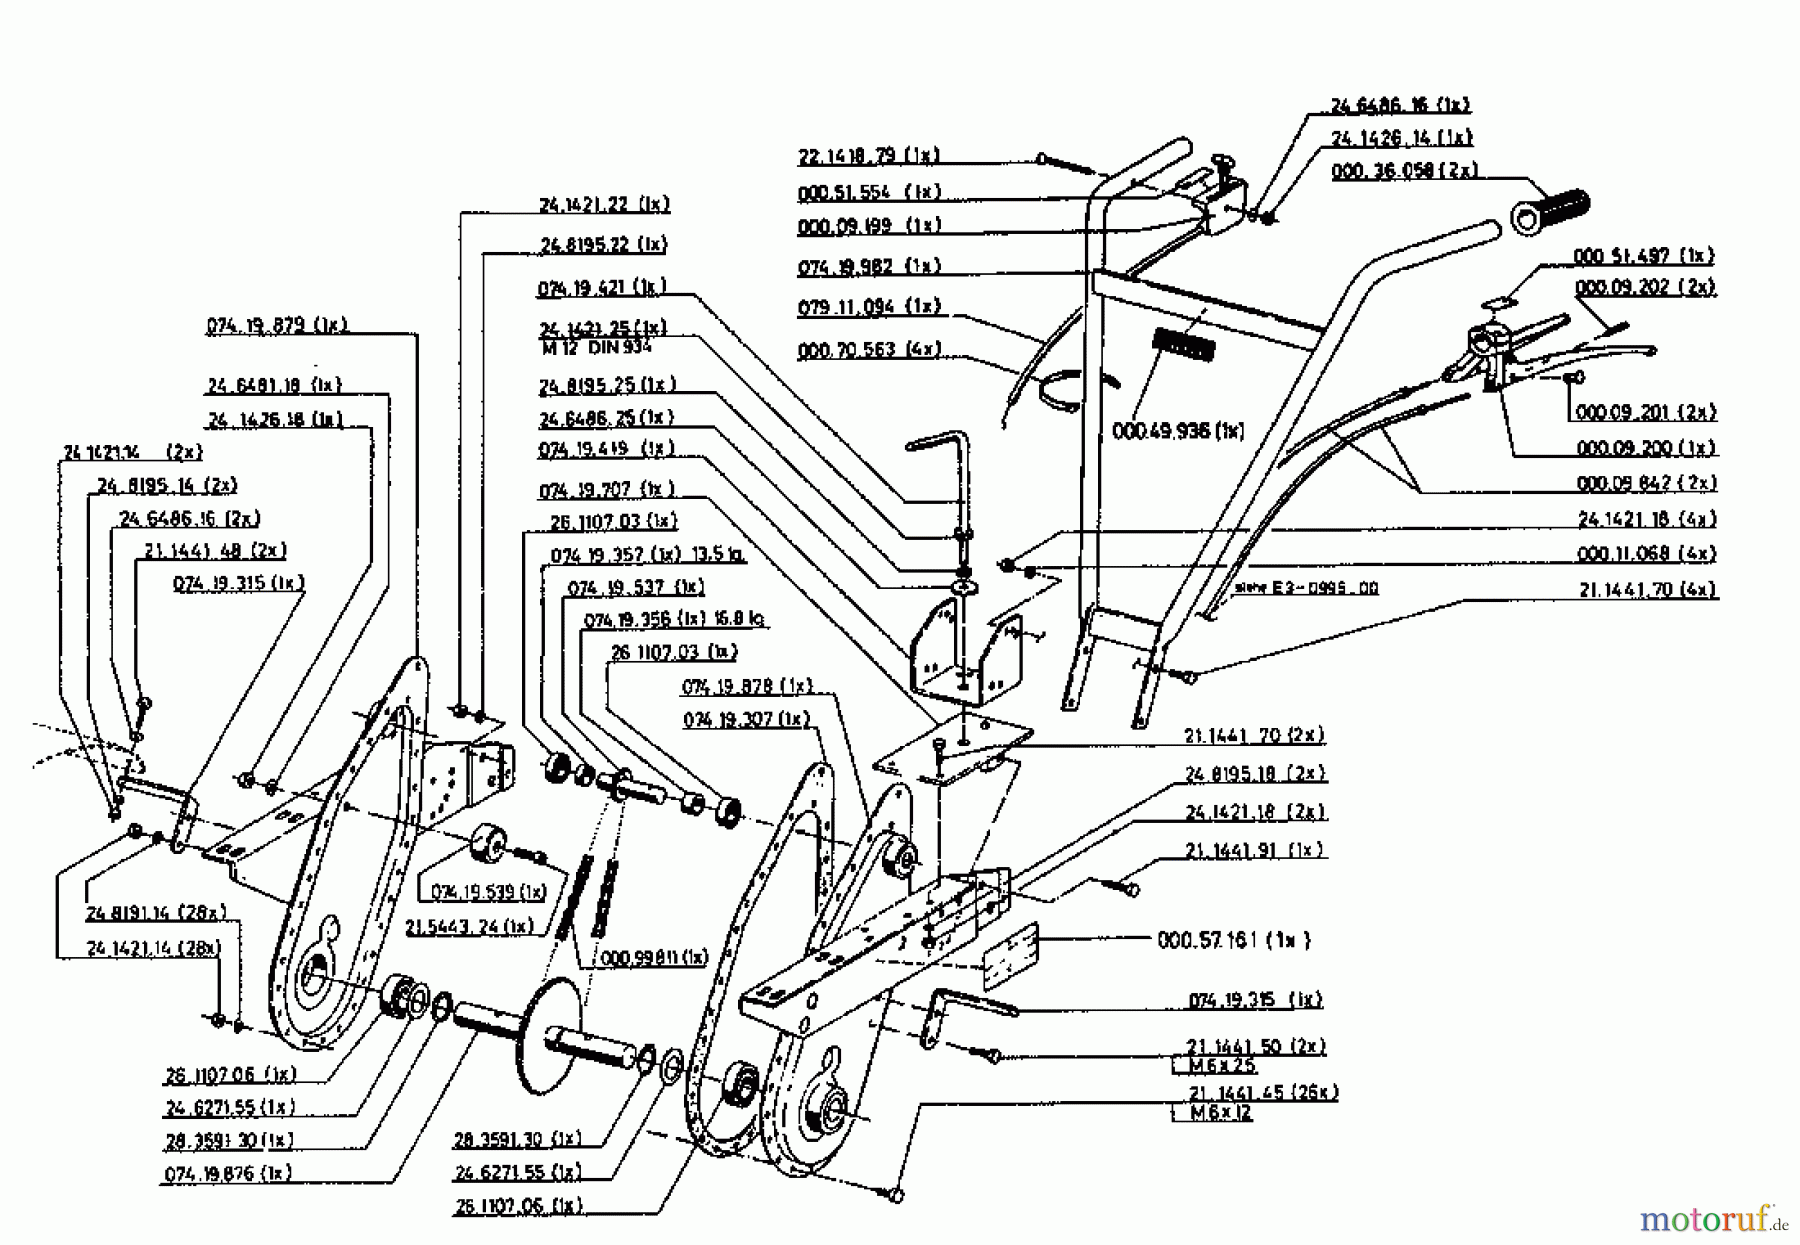  Gutbrod Motorhacken MB 62-52 07518.06  (1996) Grundgerät